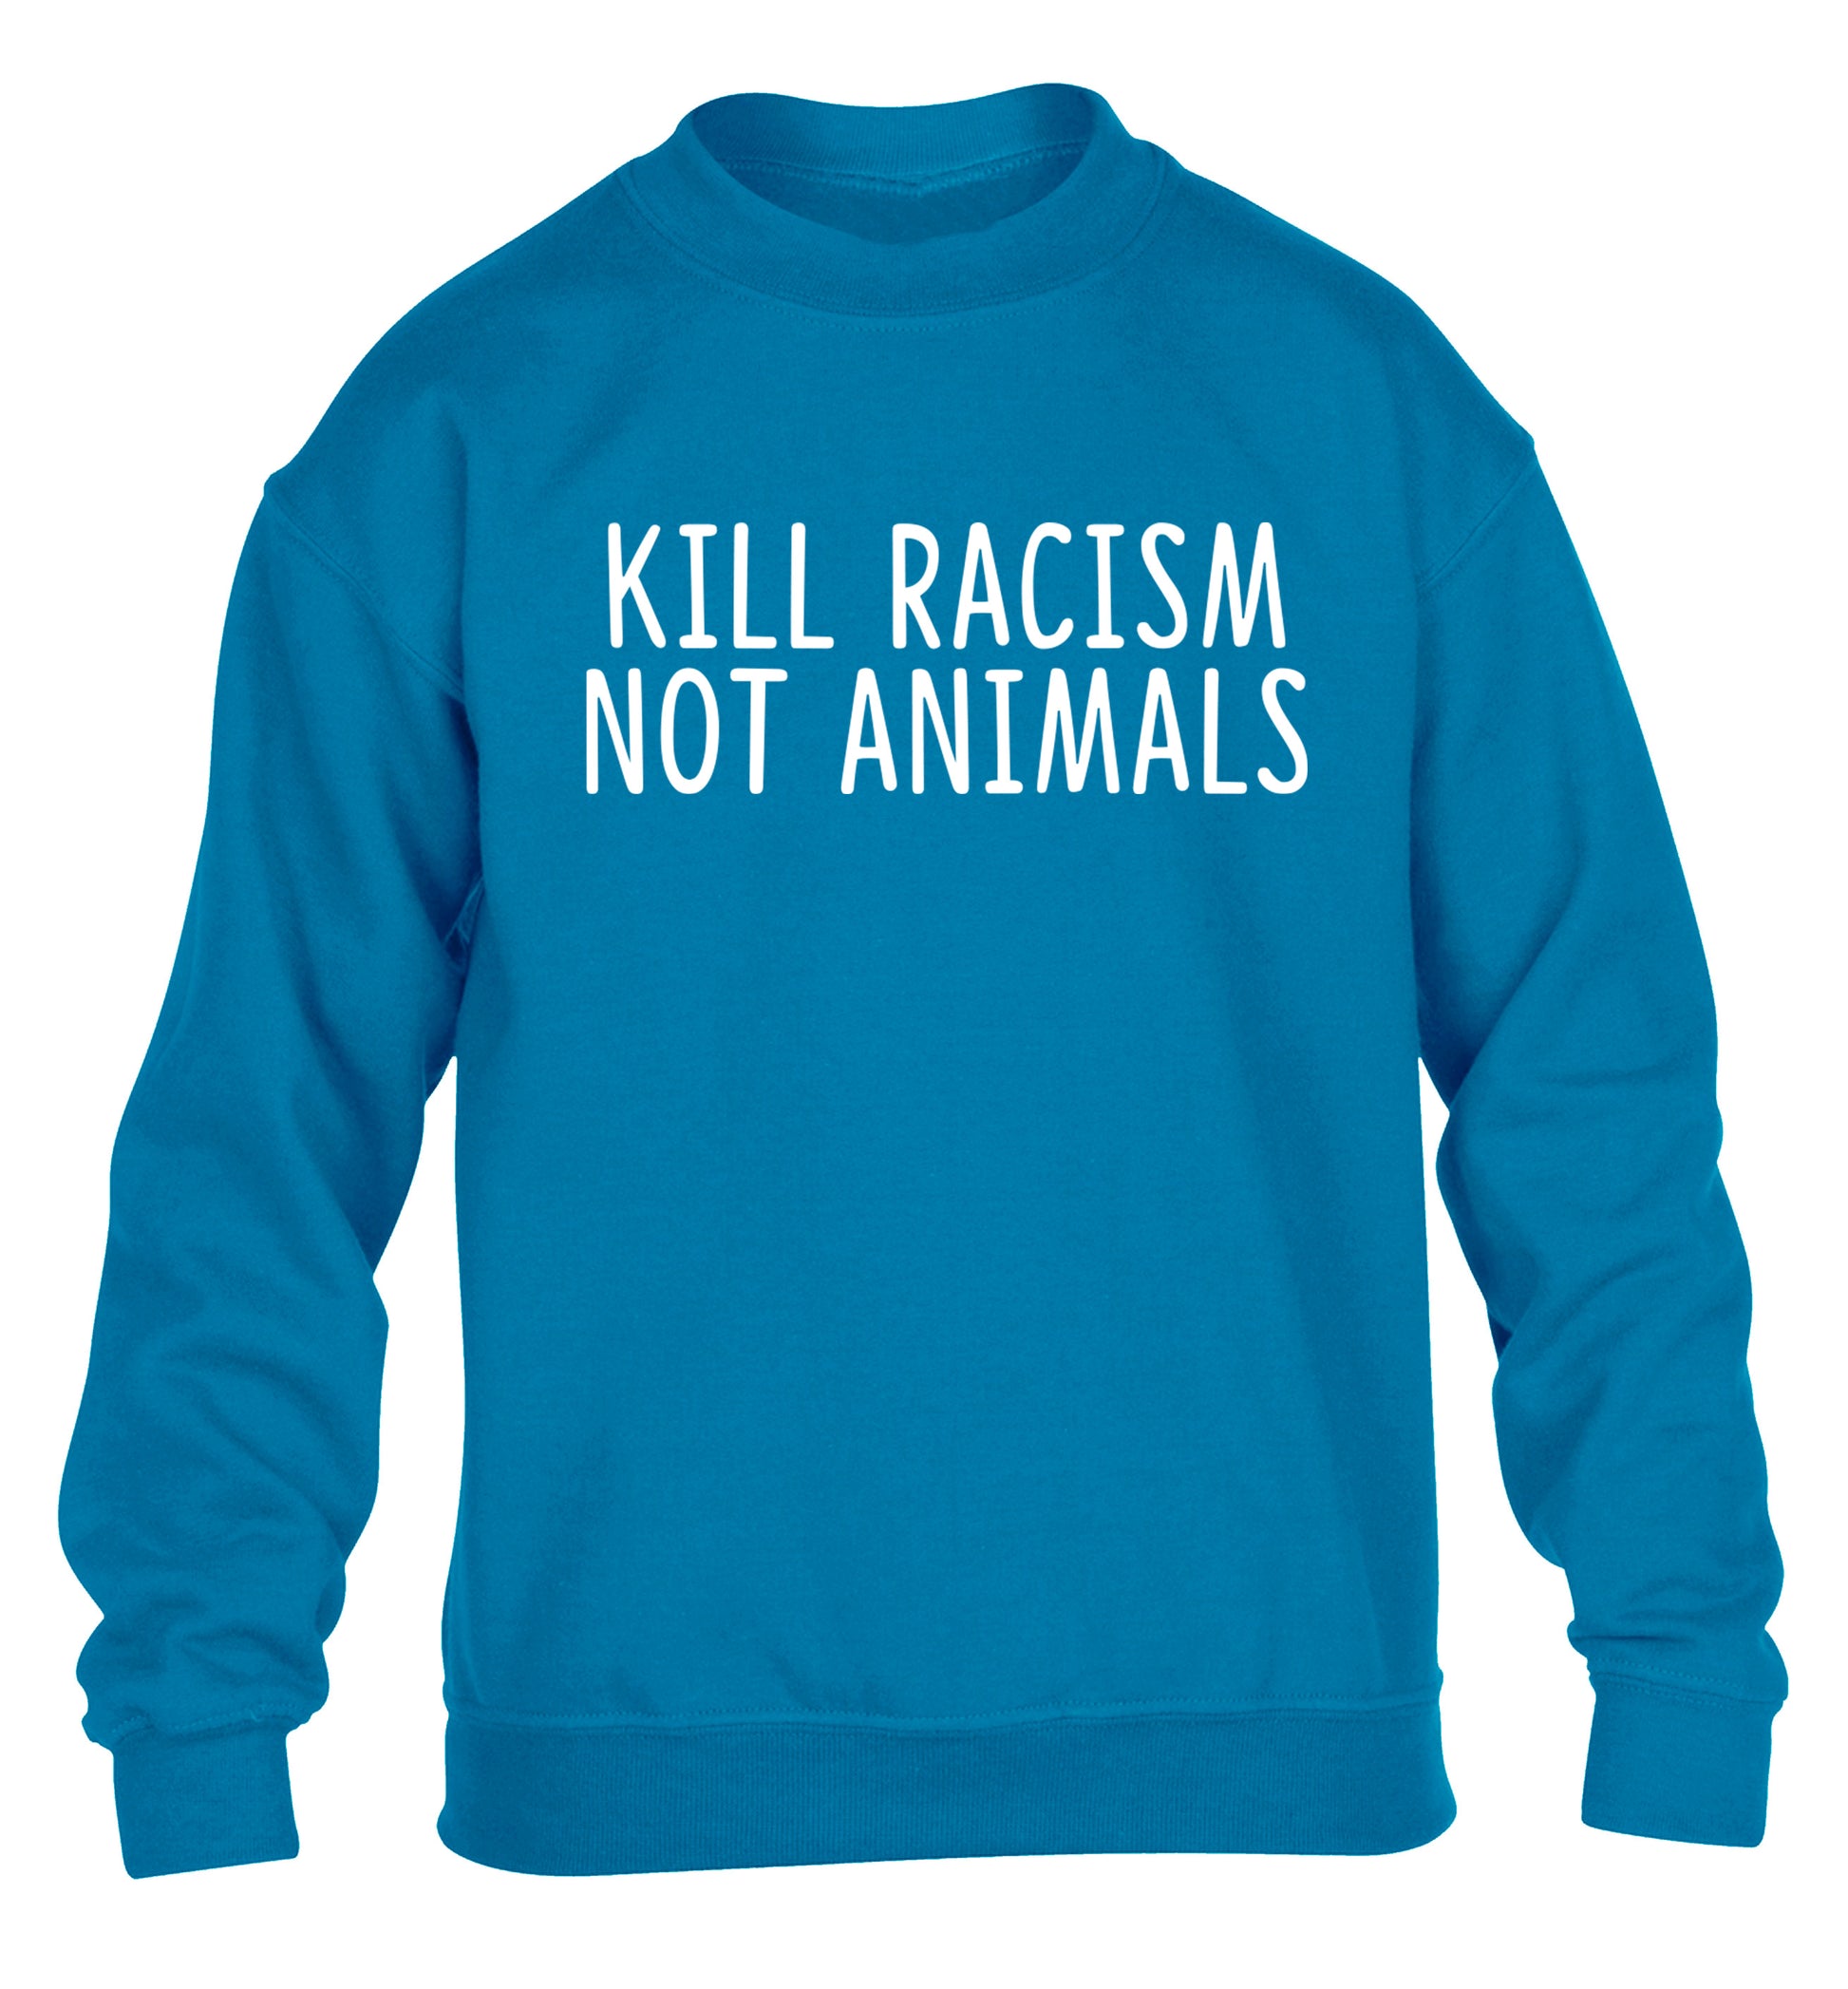 Kill Racism Not Animals children's blue sweater 12-13 Years